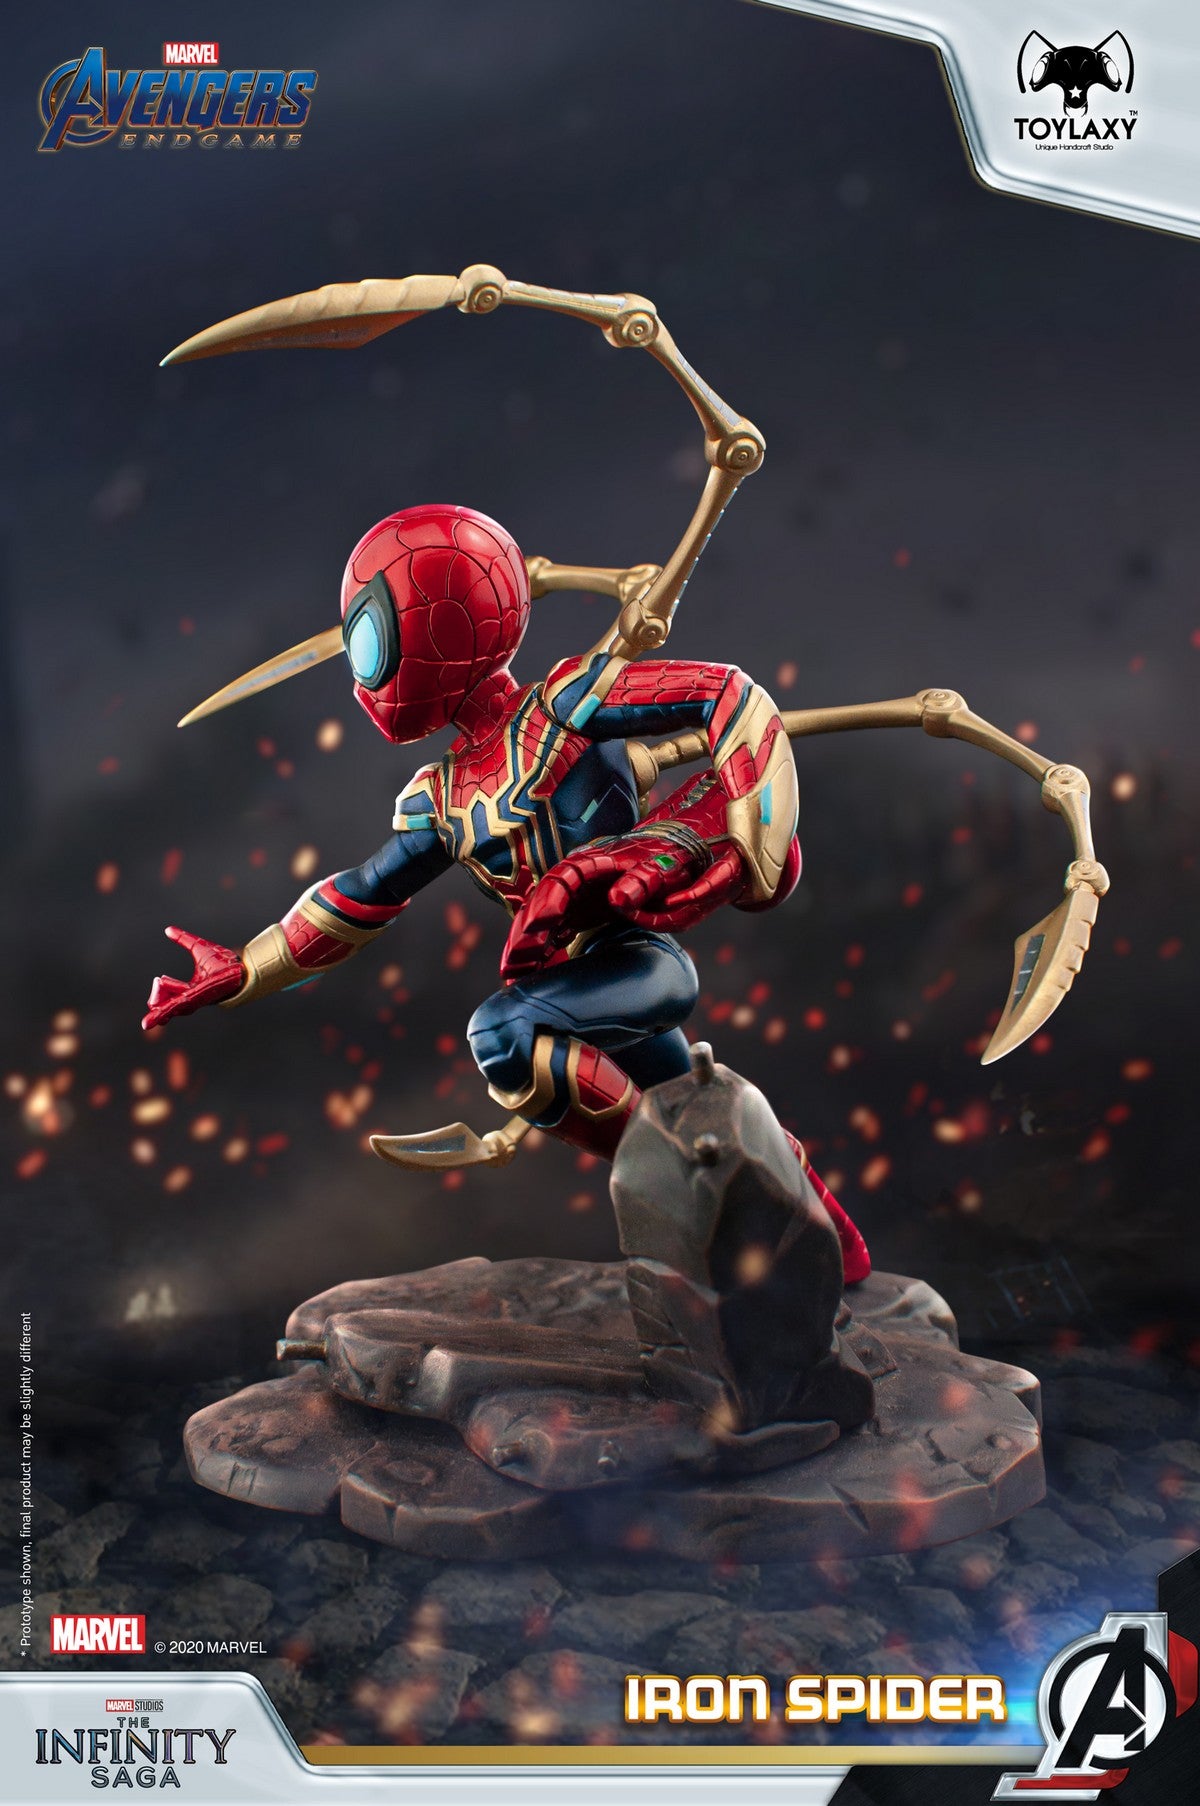 漫威復仇者聯盟：蜘蛛俠--鐵甲蜘蛛特別版正版模型手辦人偶玩具終局之戰版 Marvel's Avengers: Iron Spider Spider Man Official Figure Toy power in endgame left